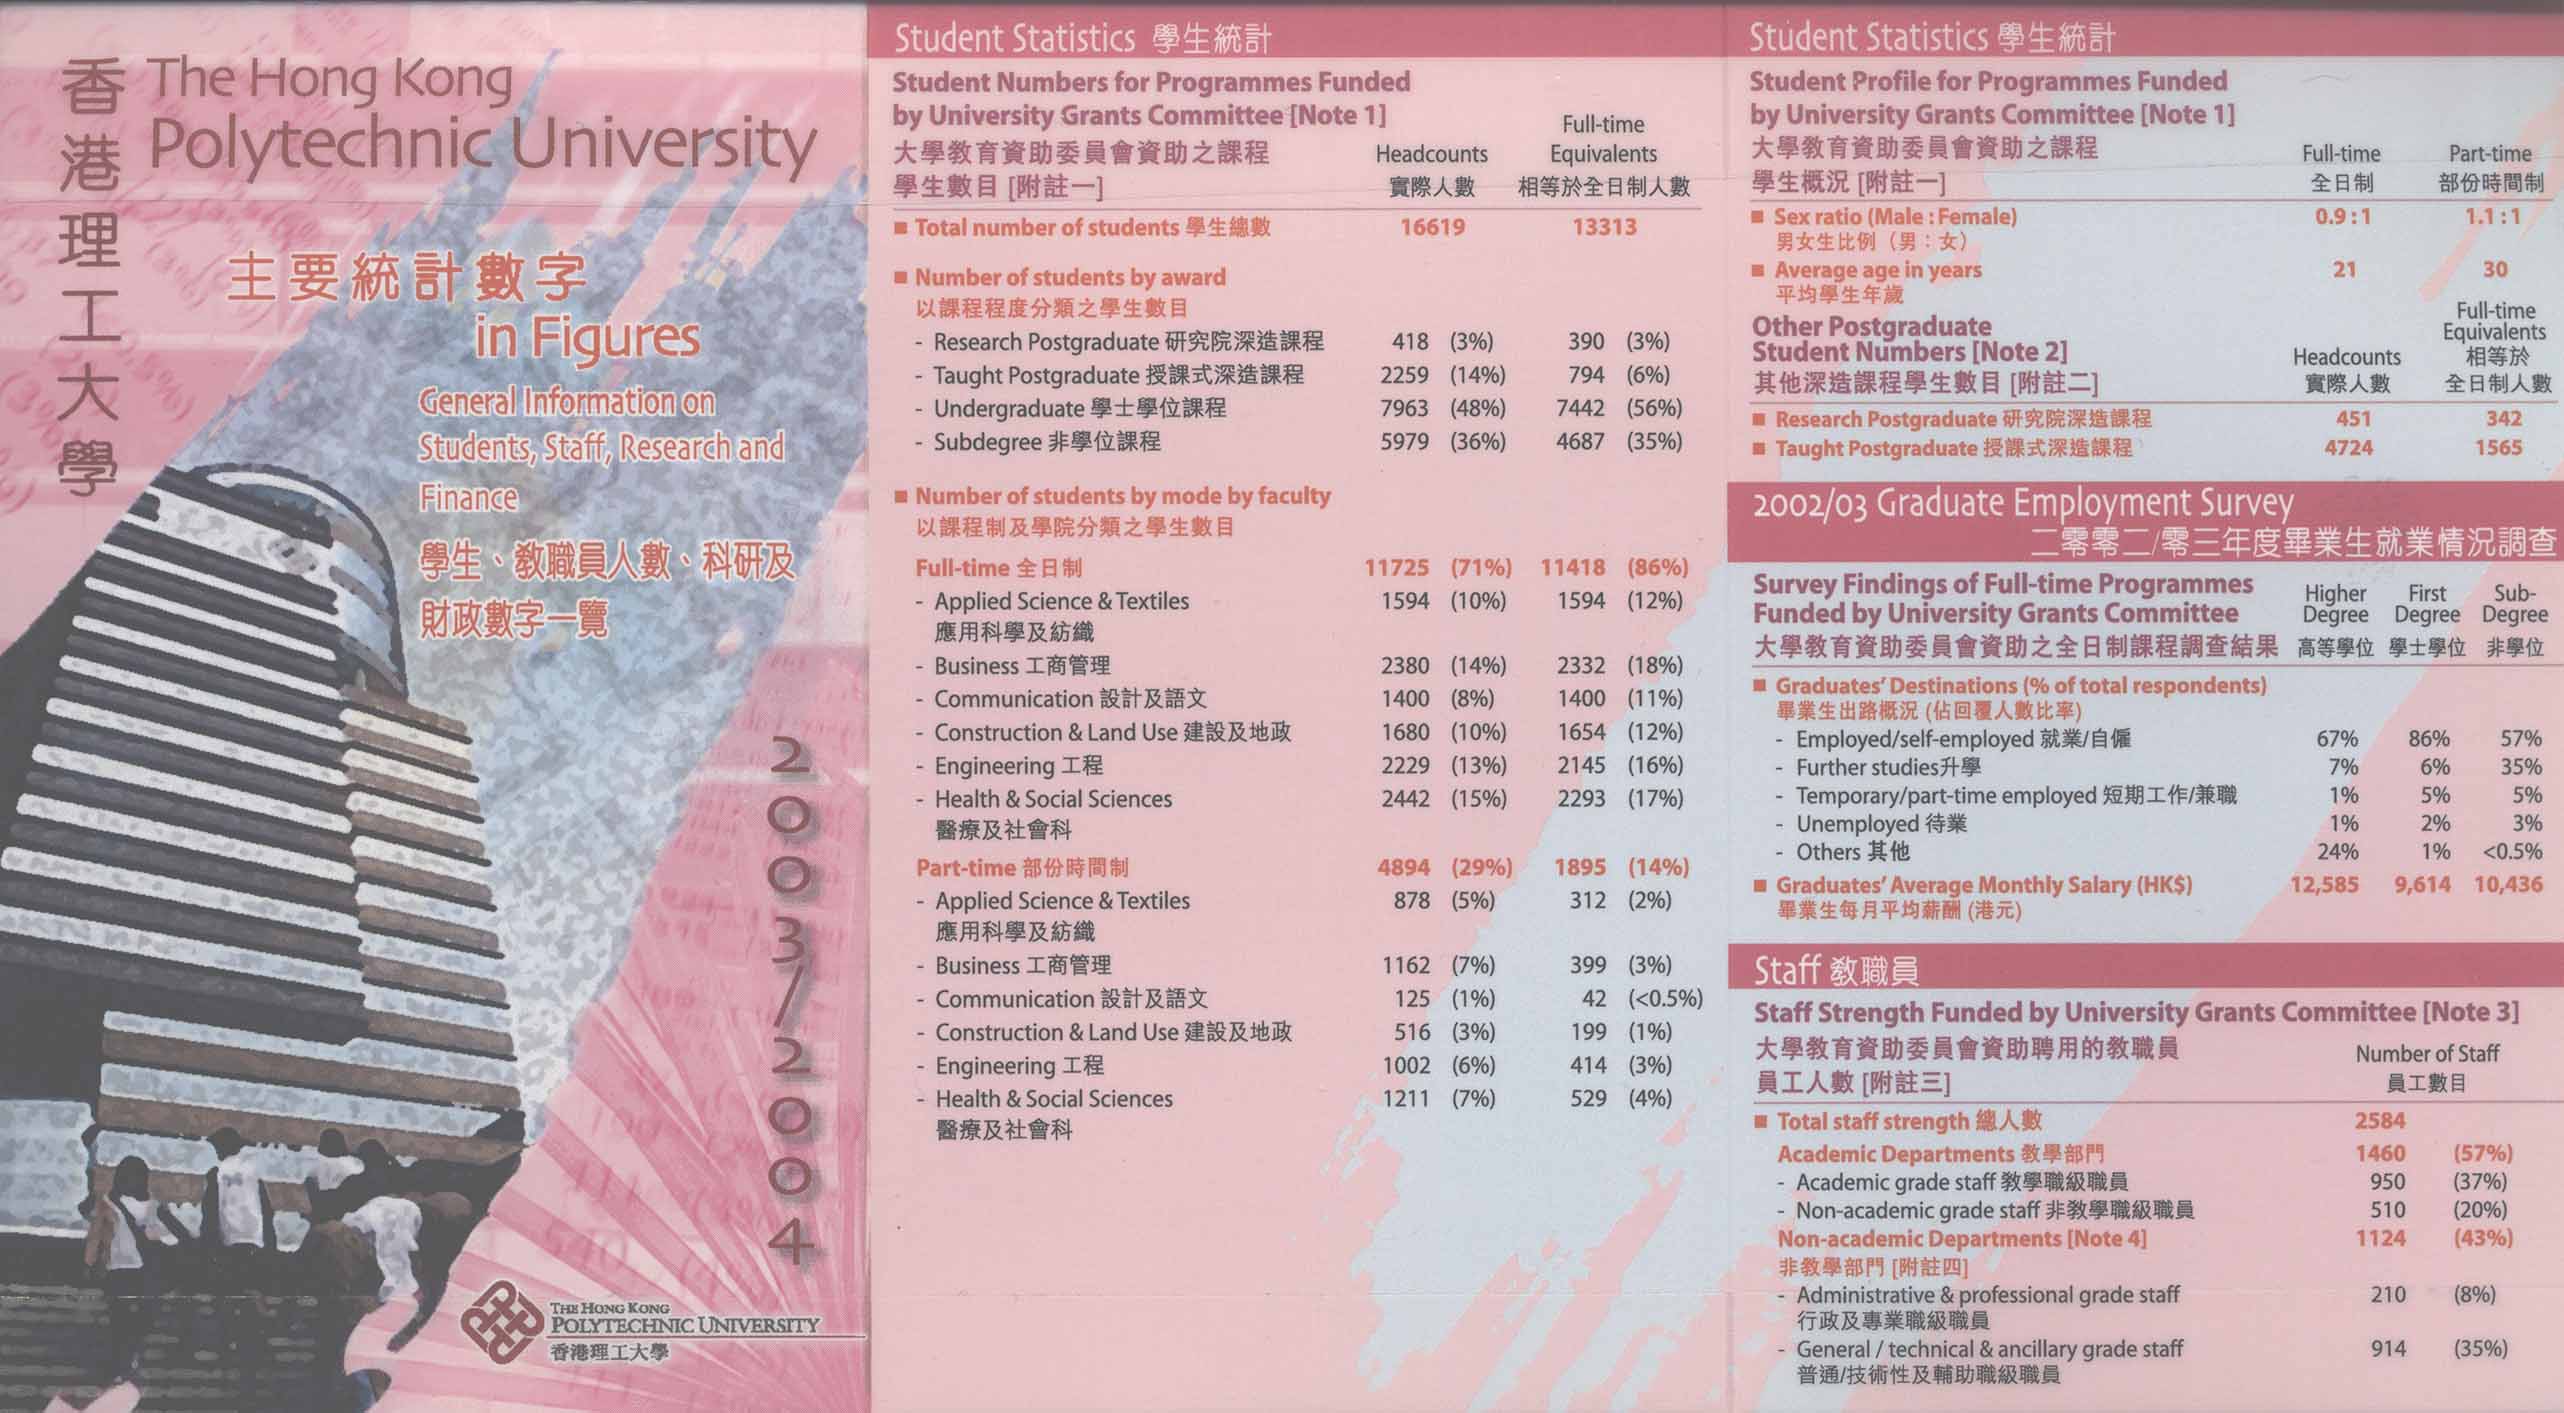 The Hong Kong Polytechnic University in figures 2003/04